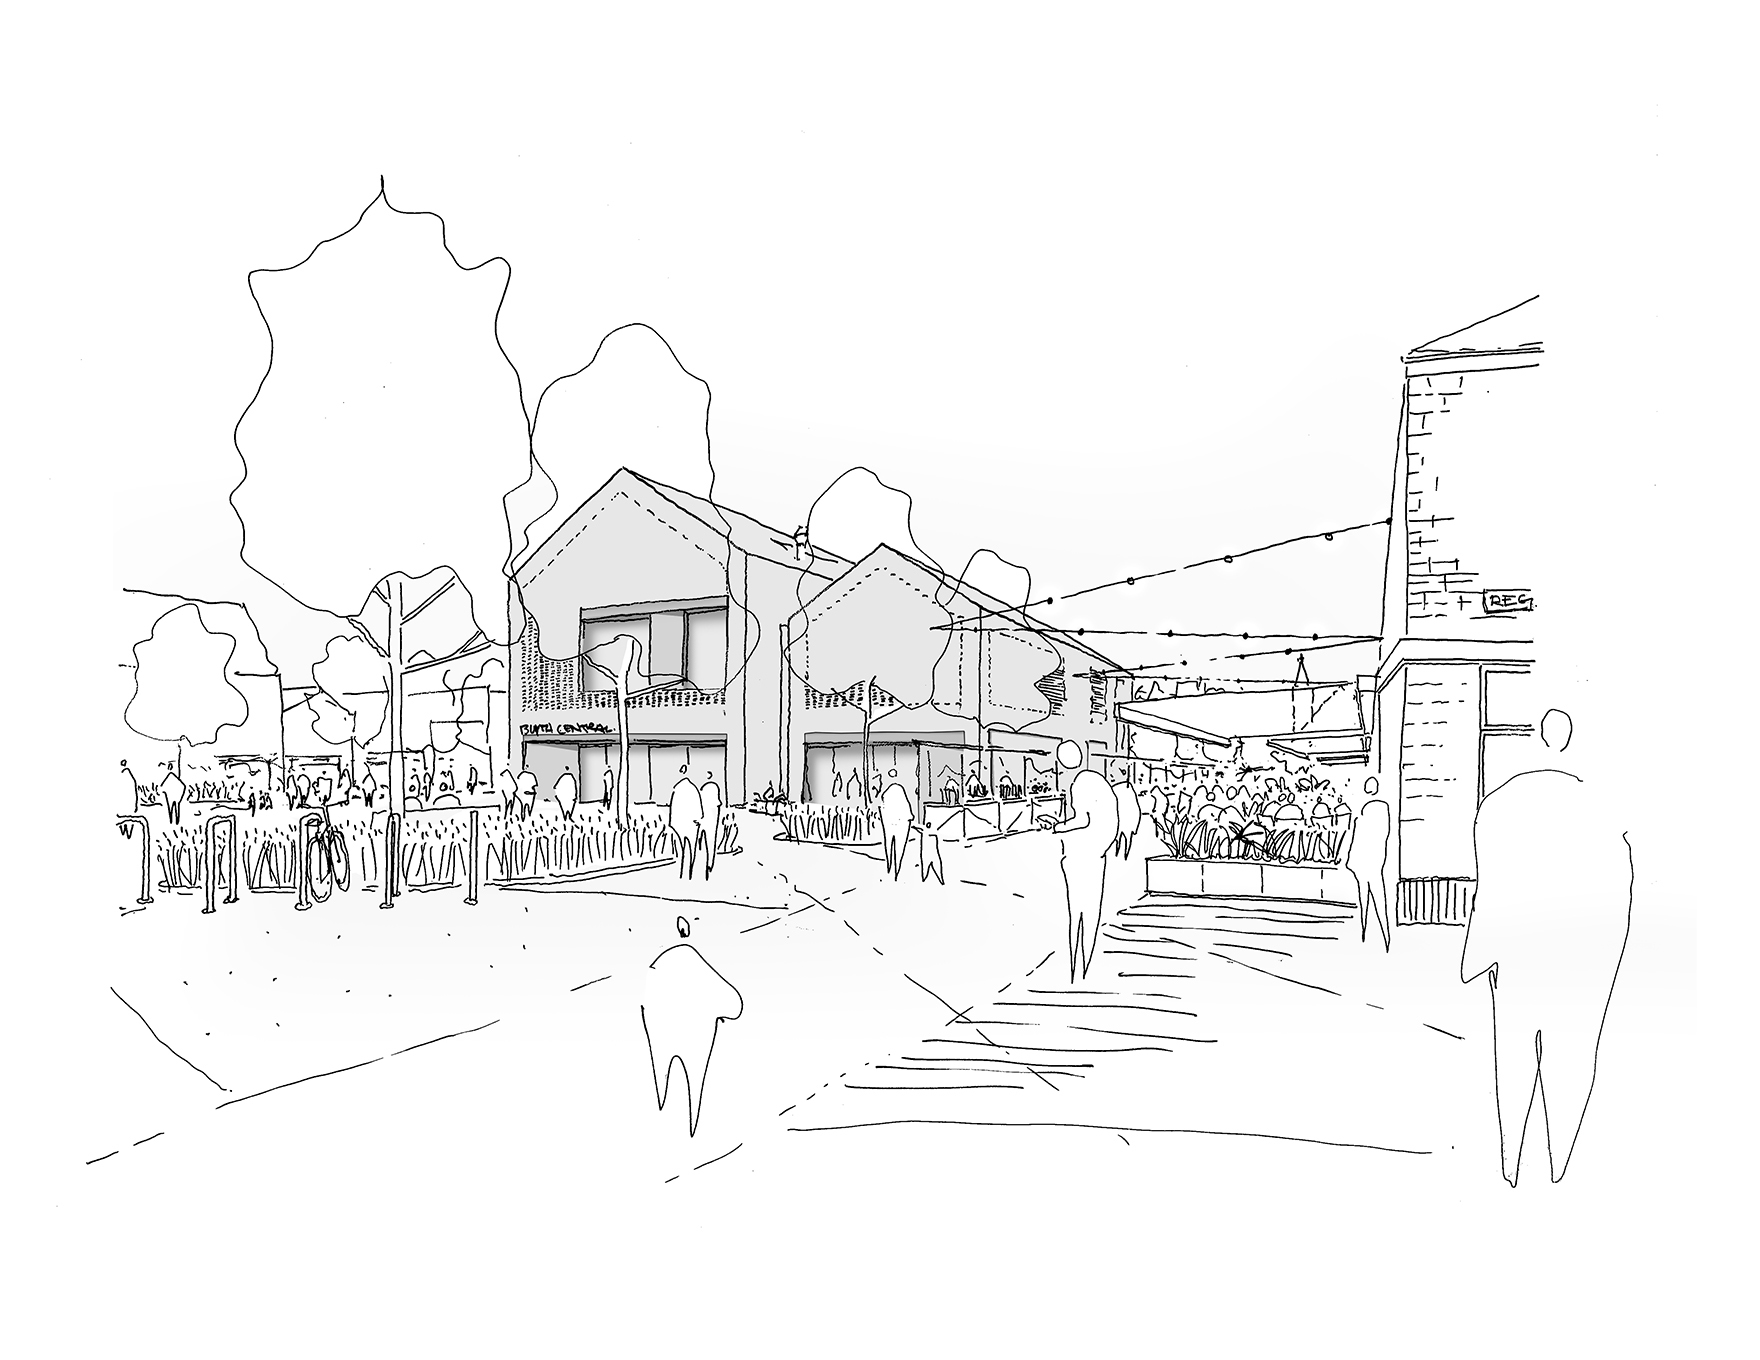 Blyth Culture Hub Market Place Cinema Sketch Construction Starts Faulknerbrowns Architects L